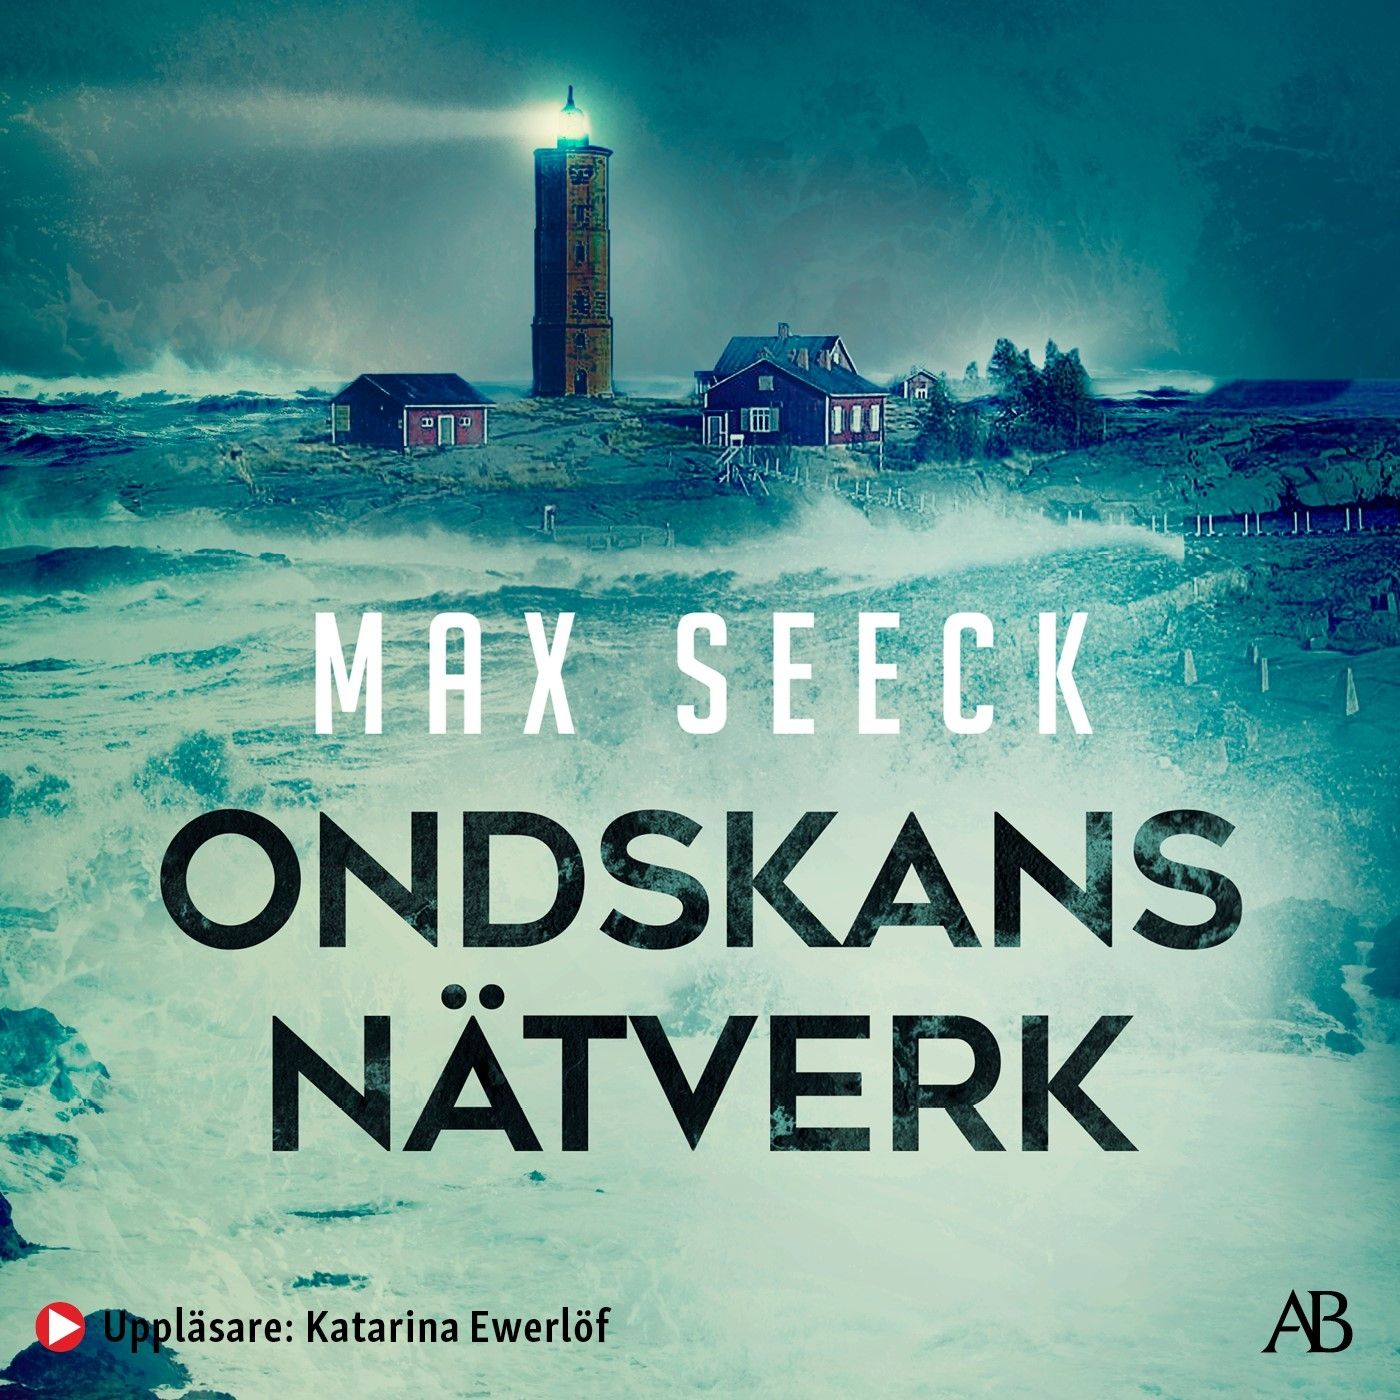 Ondskans nätverk, audiobook by Max Seeck